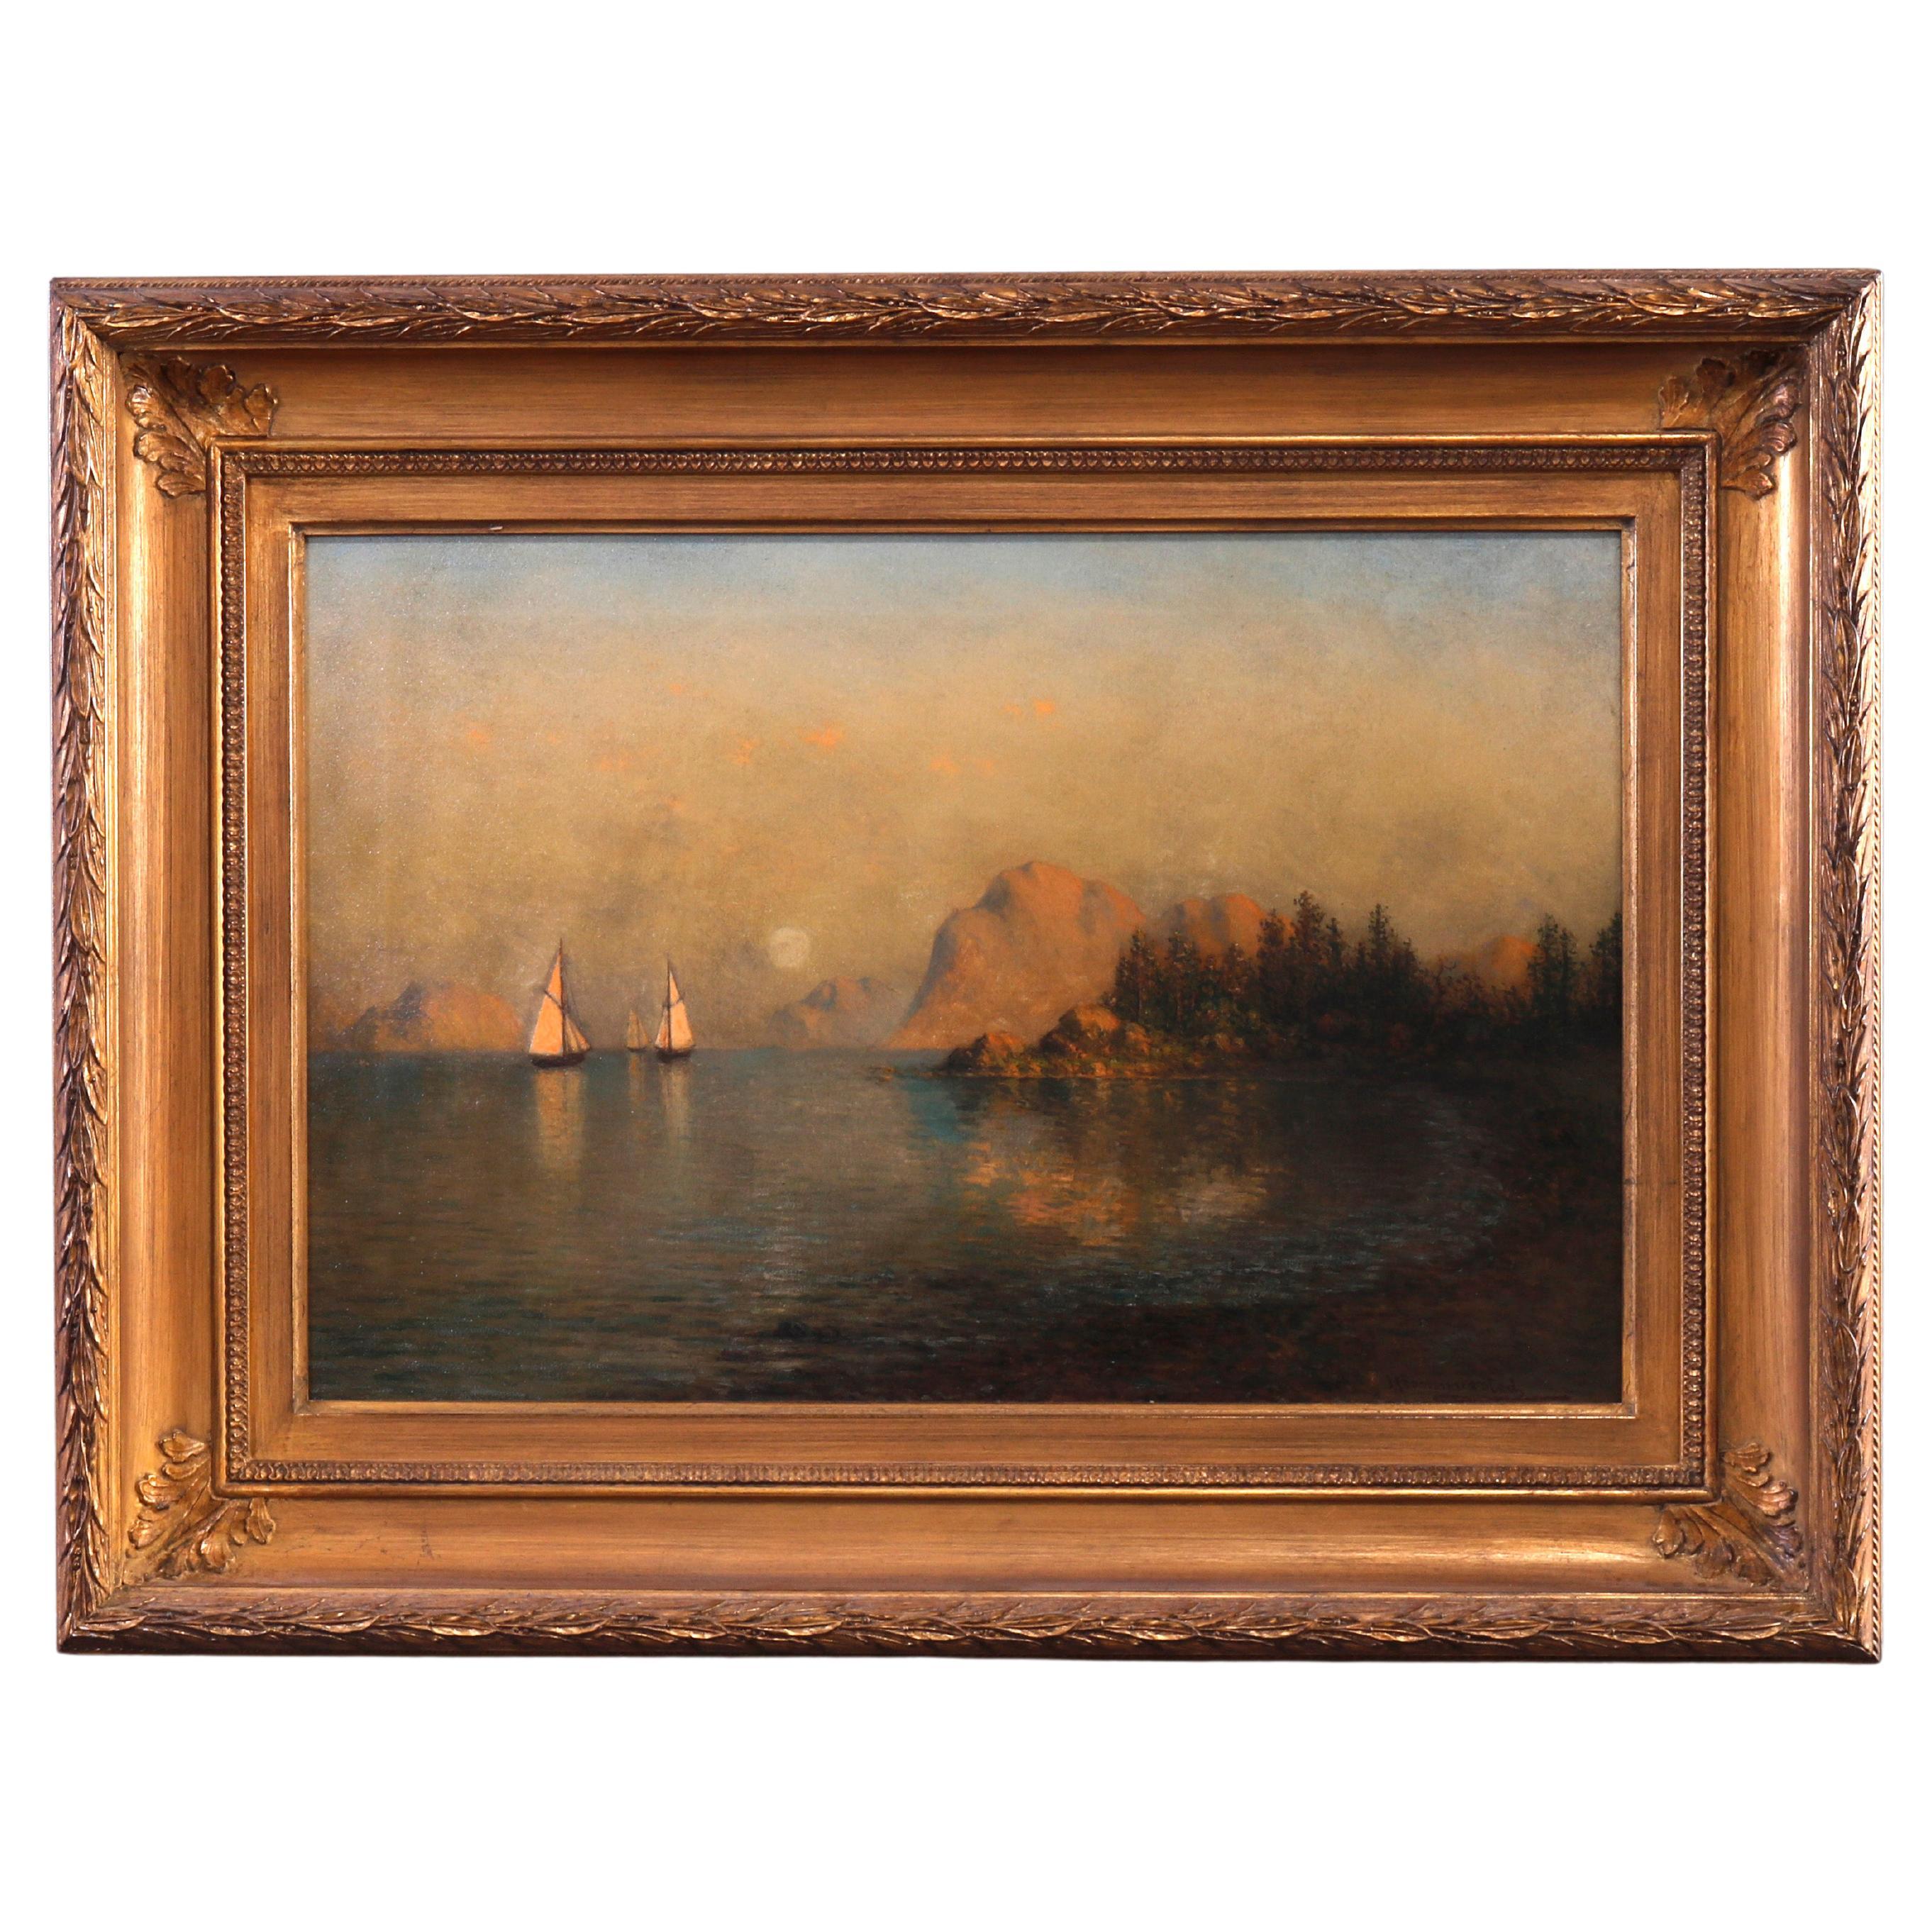 Antique Coastal Oil on Canvas Painting by John Olsen Hammerstad, Circa 1900